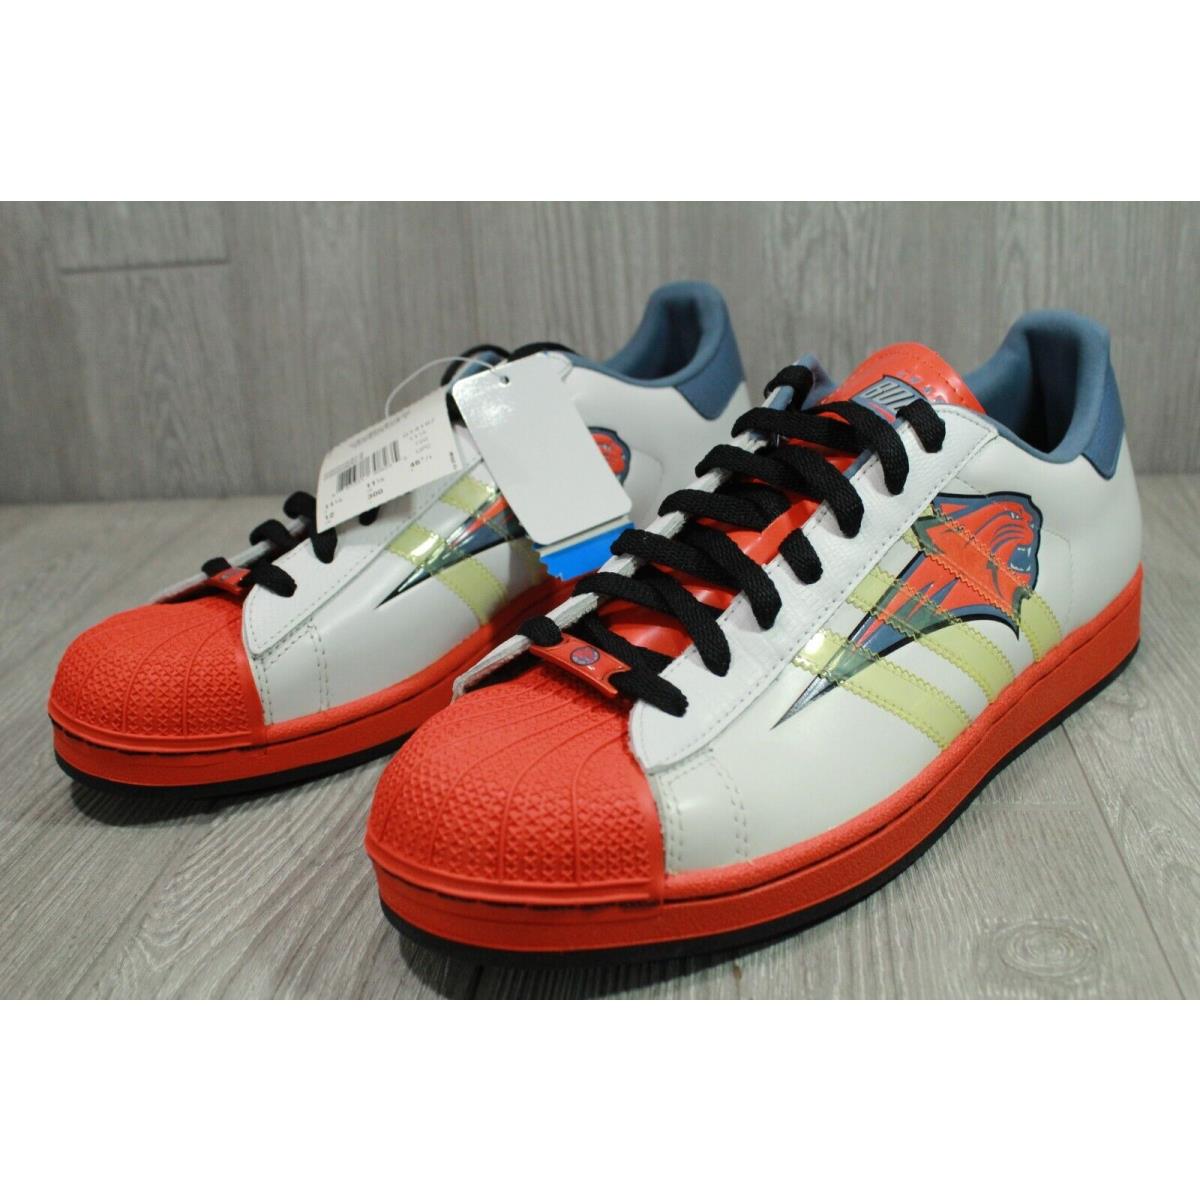 Adidas shoes Superstar - Multicolor 0